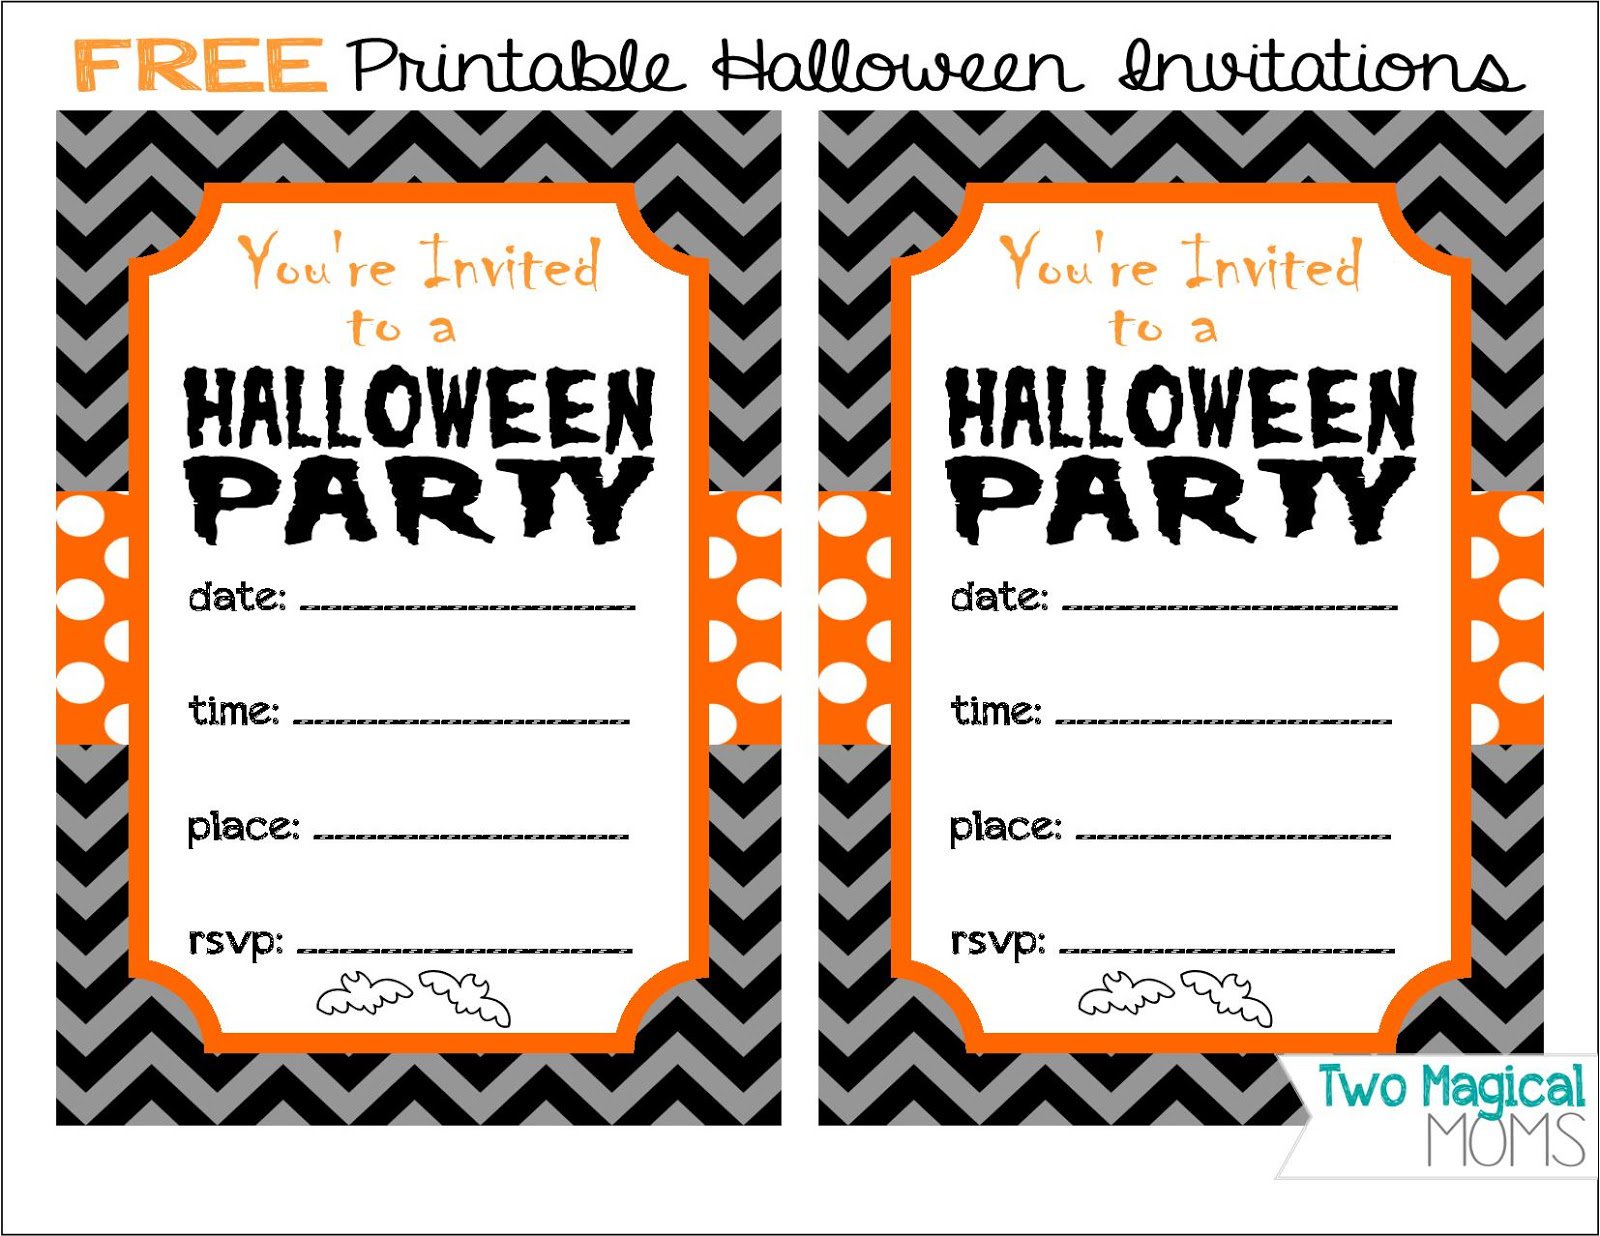 Print Out Halloween Invitation Invitation Design Blog